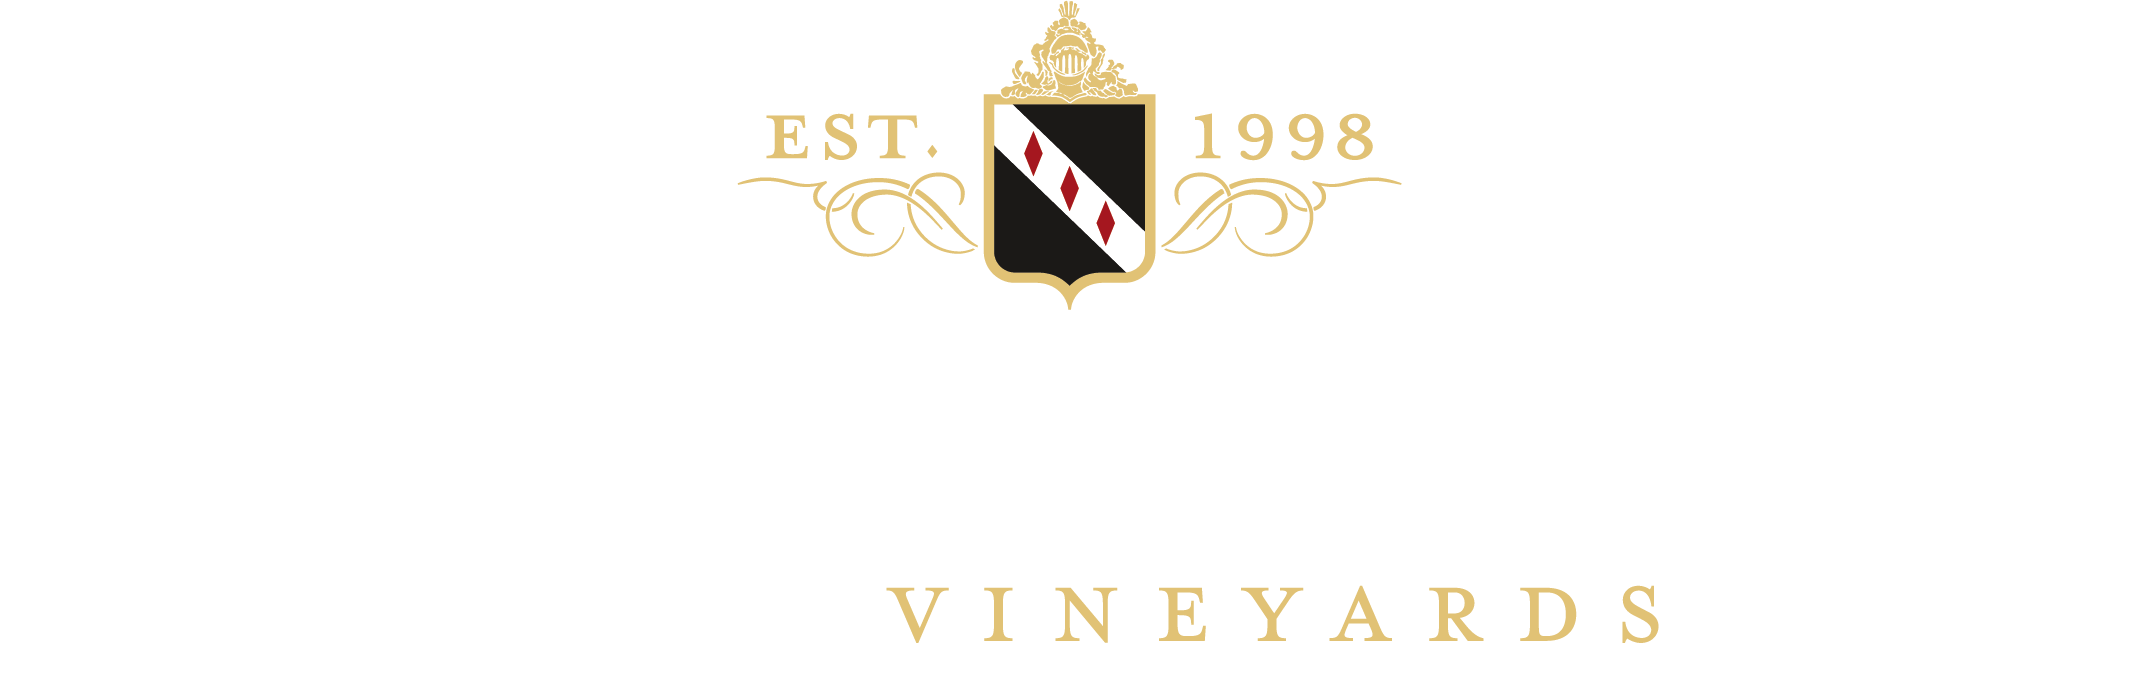 King Family Vineyards logo